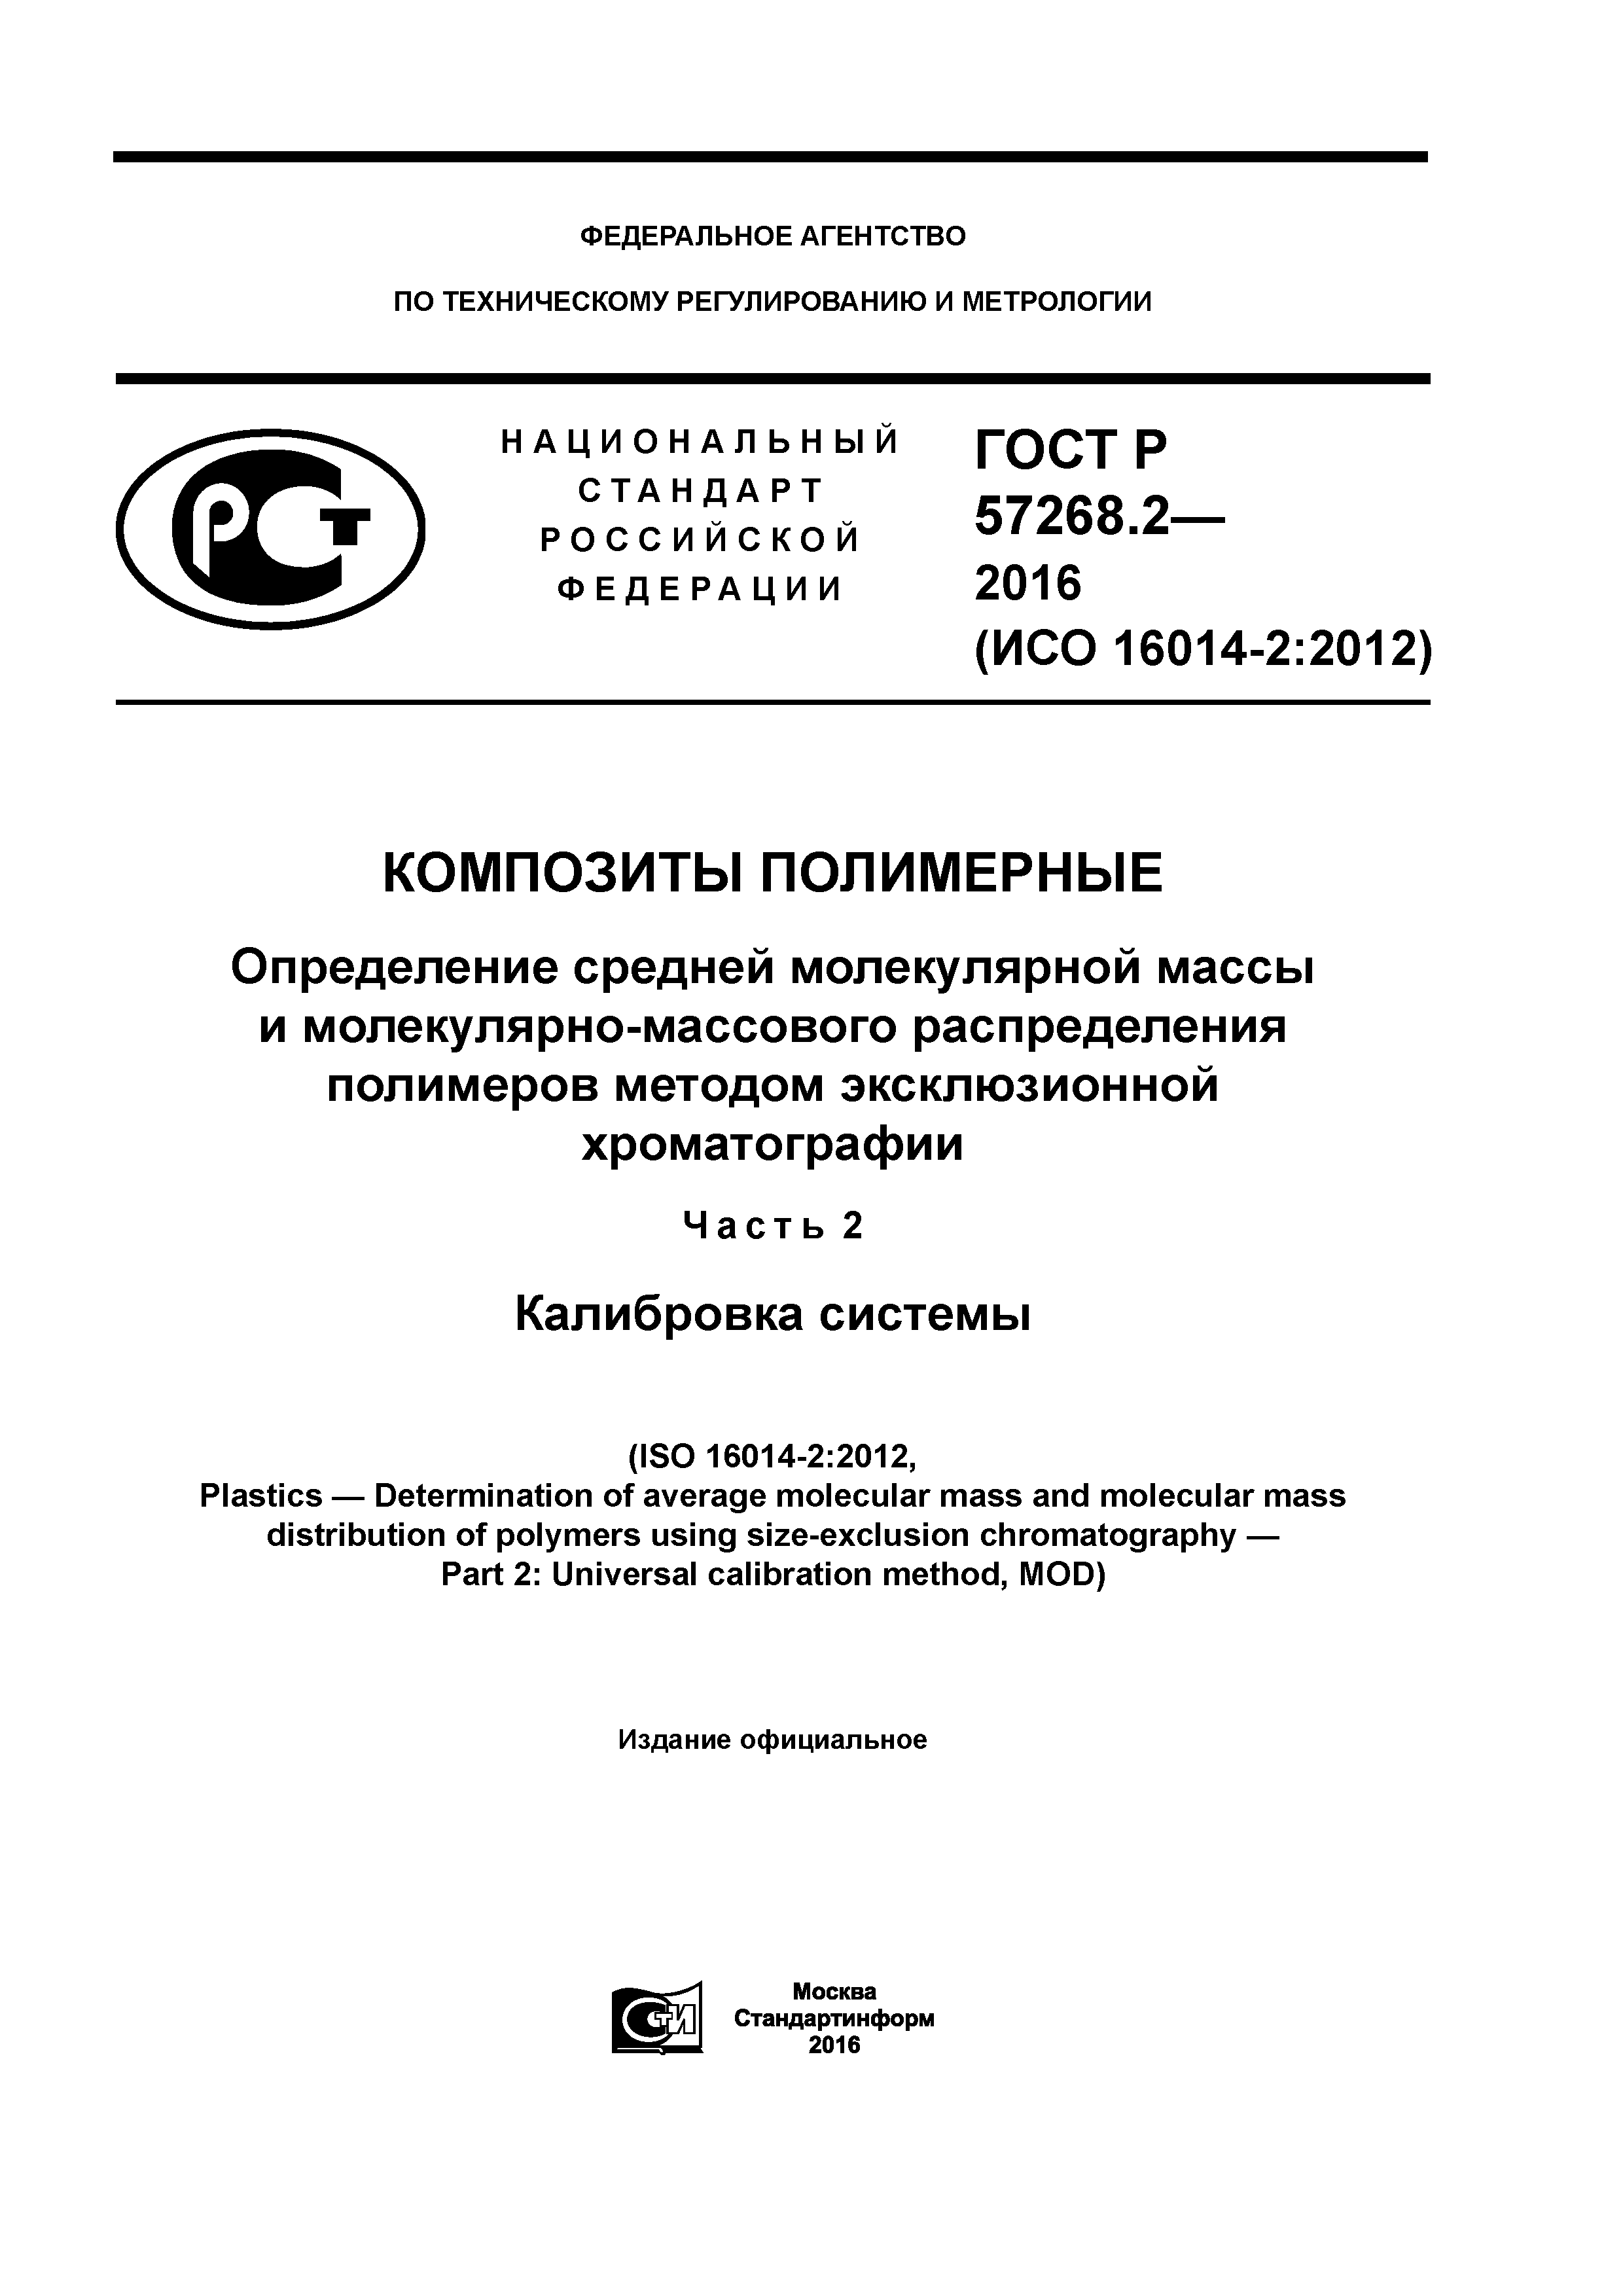 ГОСТ Р 57268.2-2016